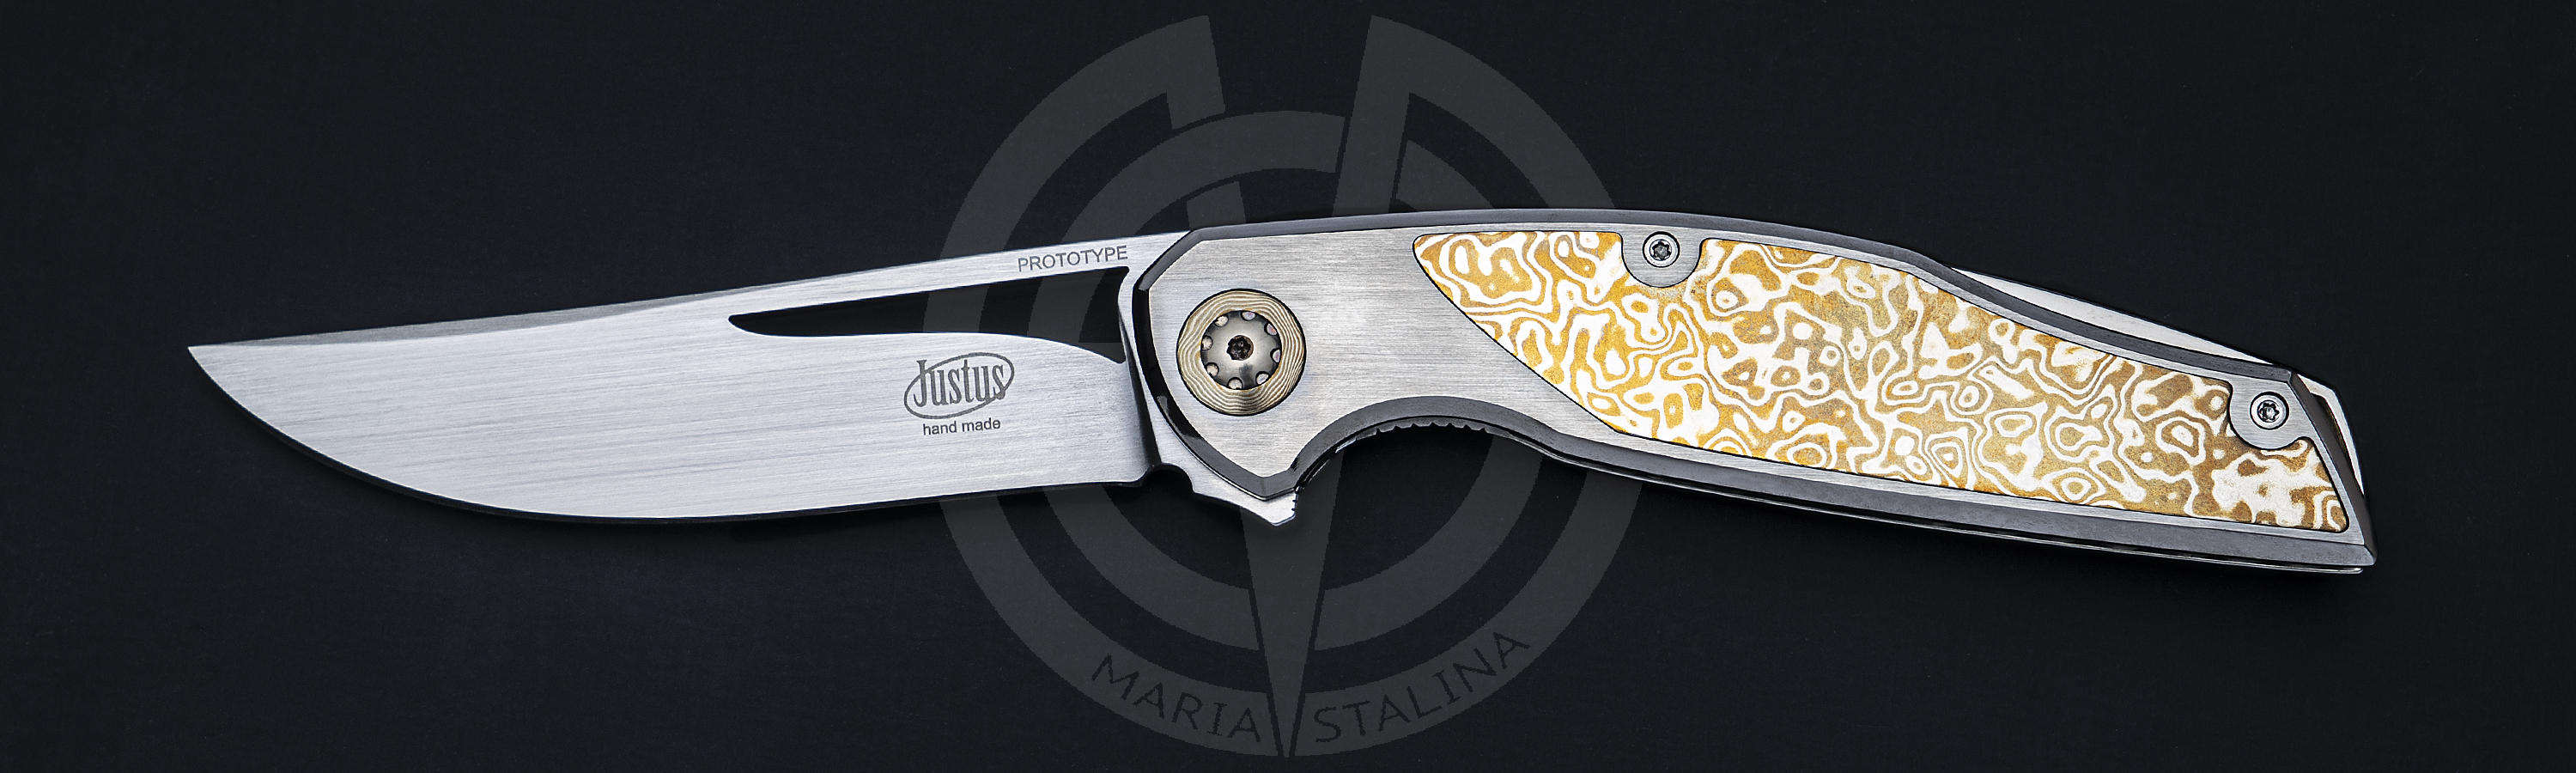 Justus Knives BLOND prototype